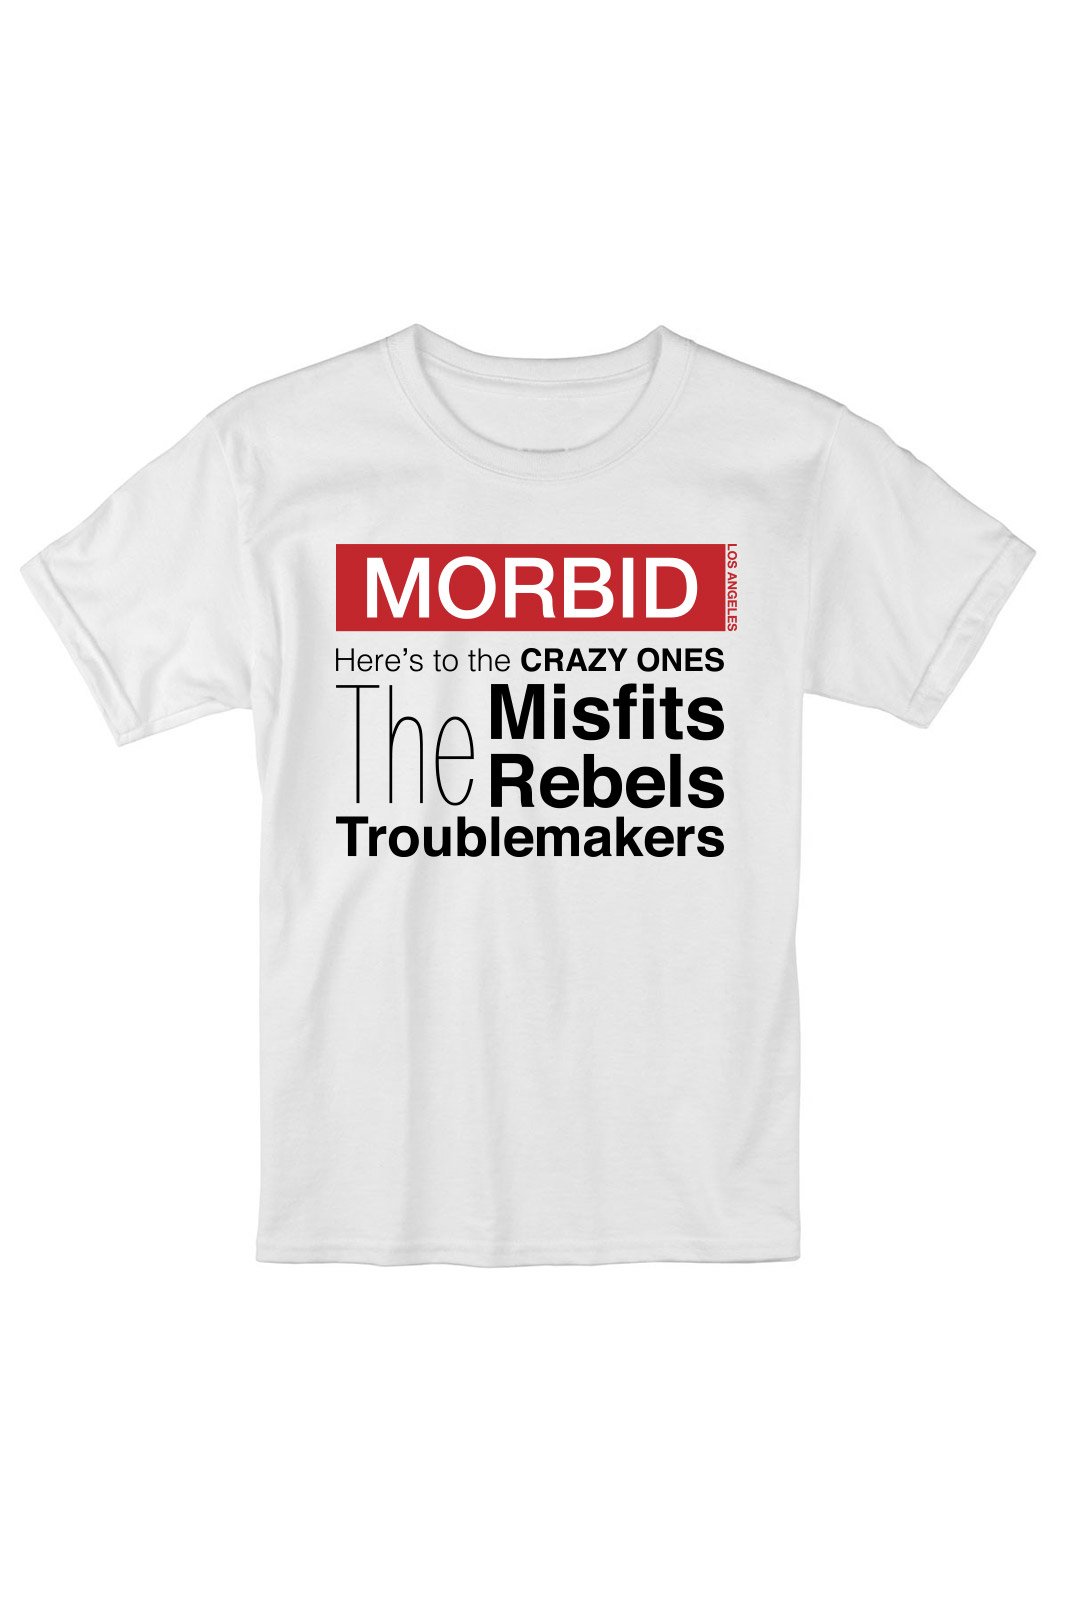 MORBID LA Clothing Streetwear Misfits Rebels White t-shirt